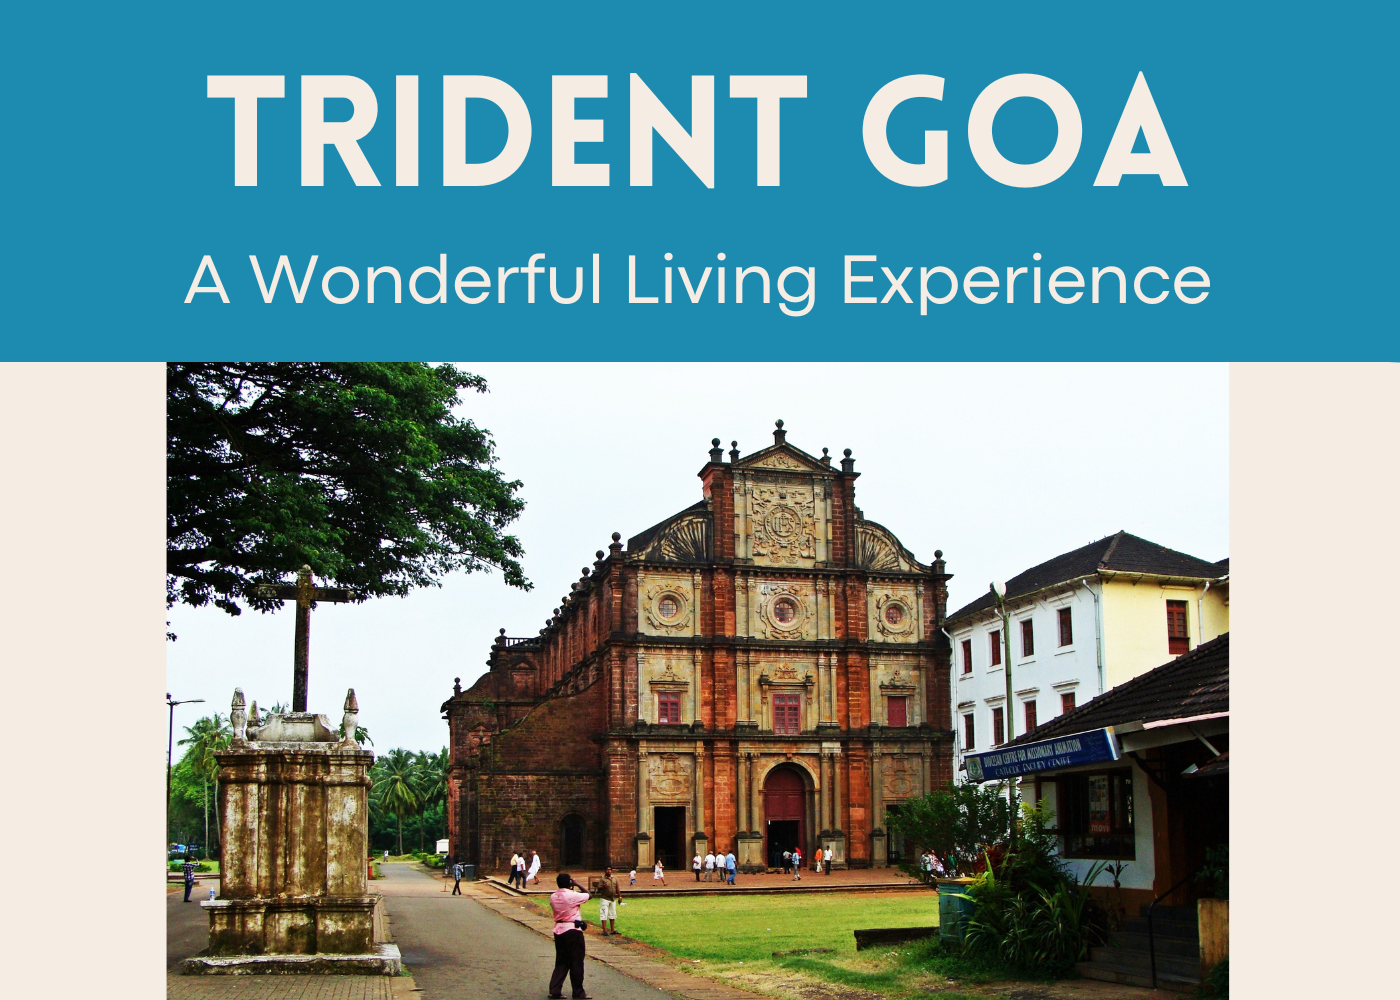 Trident Goa